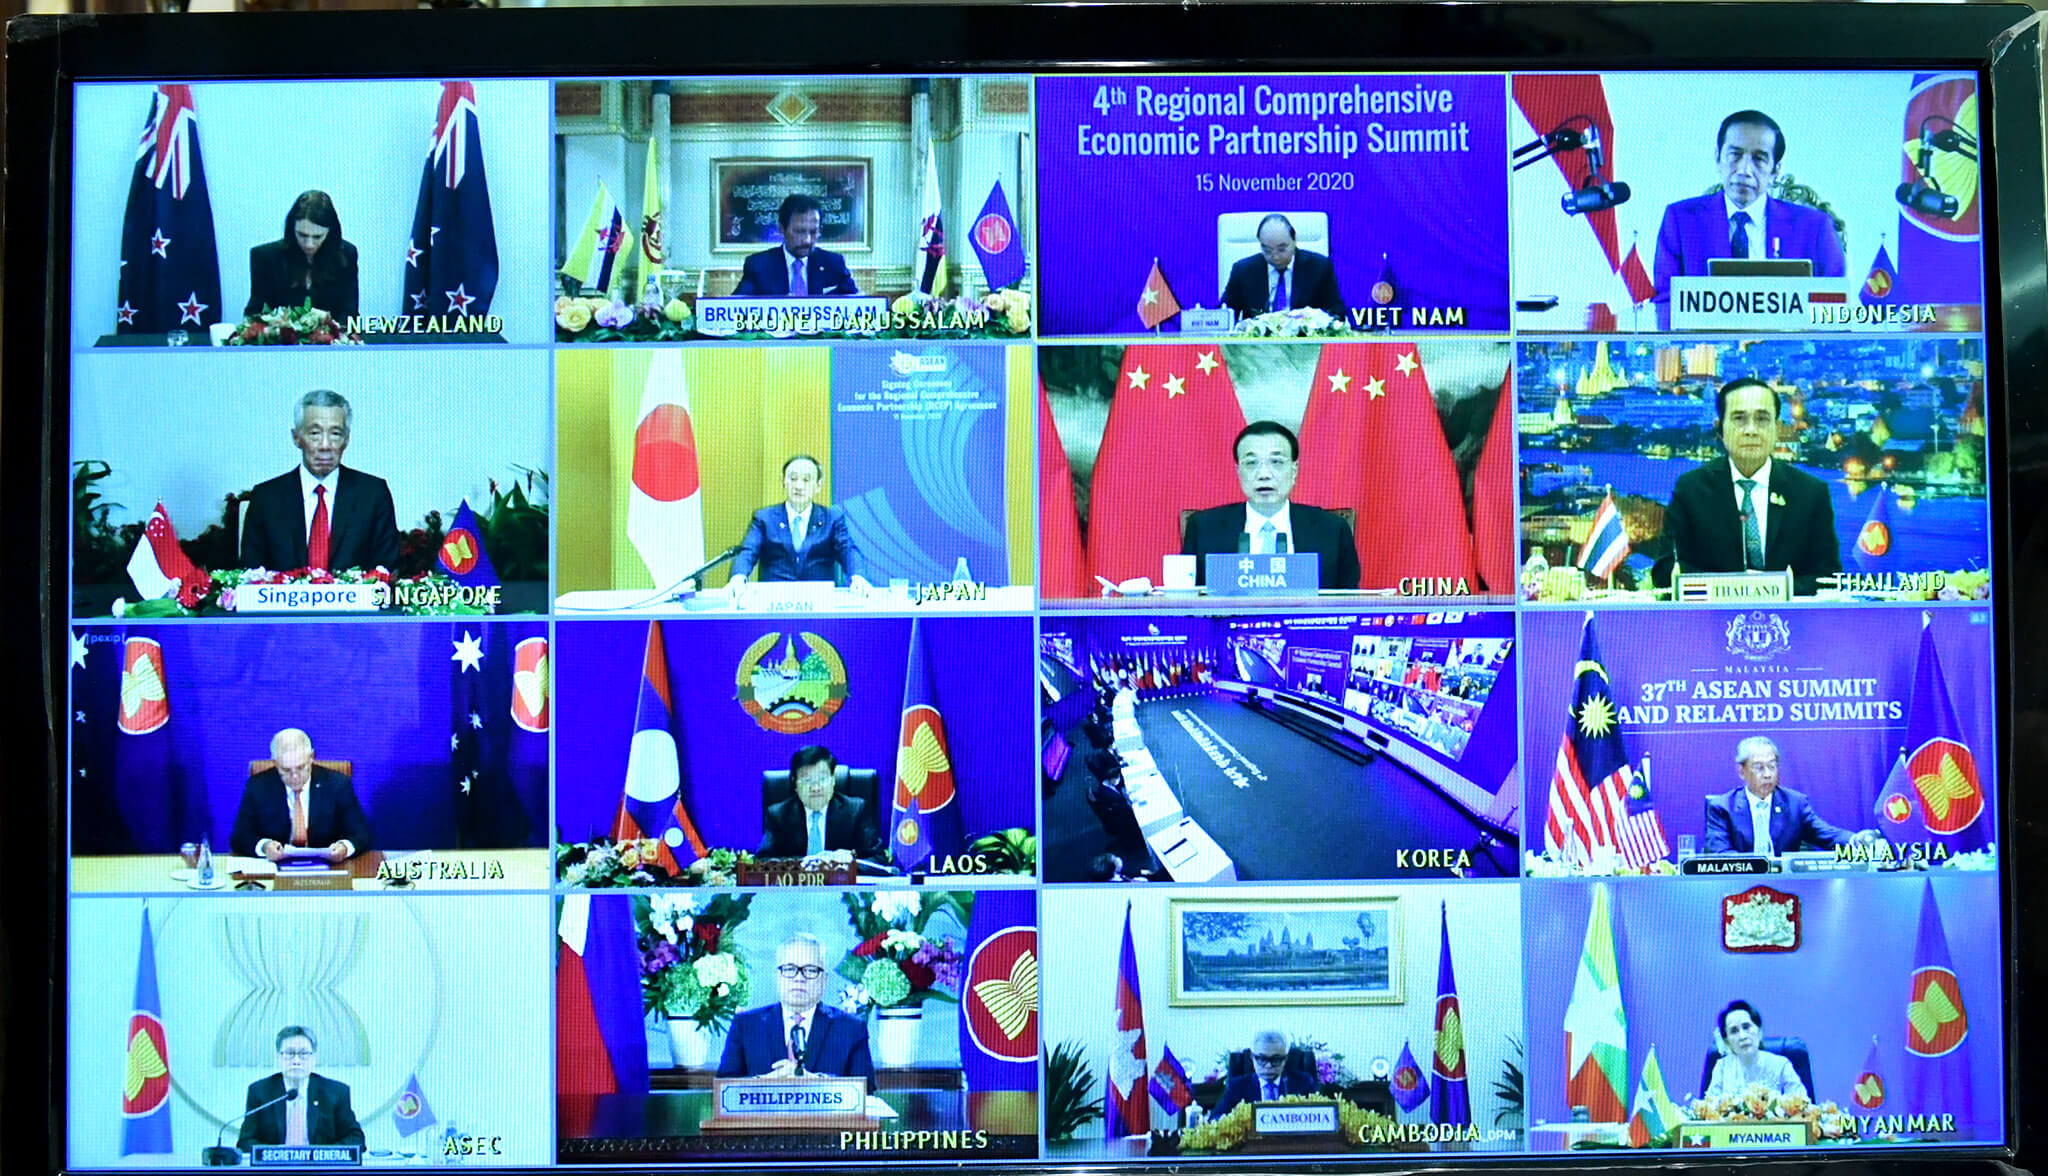 Regeringsleiders in gesprek over het vrijhandelsverdrag Regional Comprehensive Economic Partnership (RCEP) in november 2020.